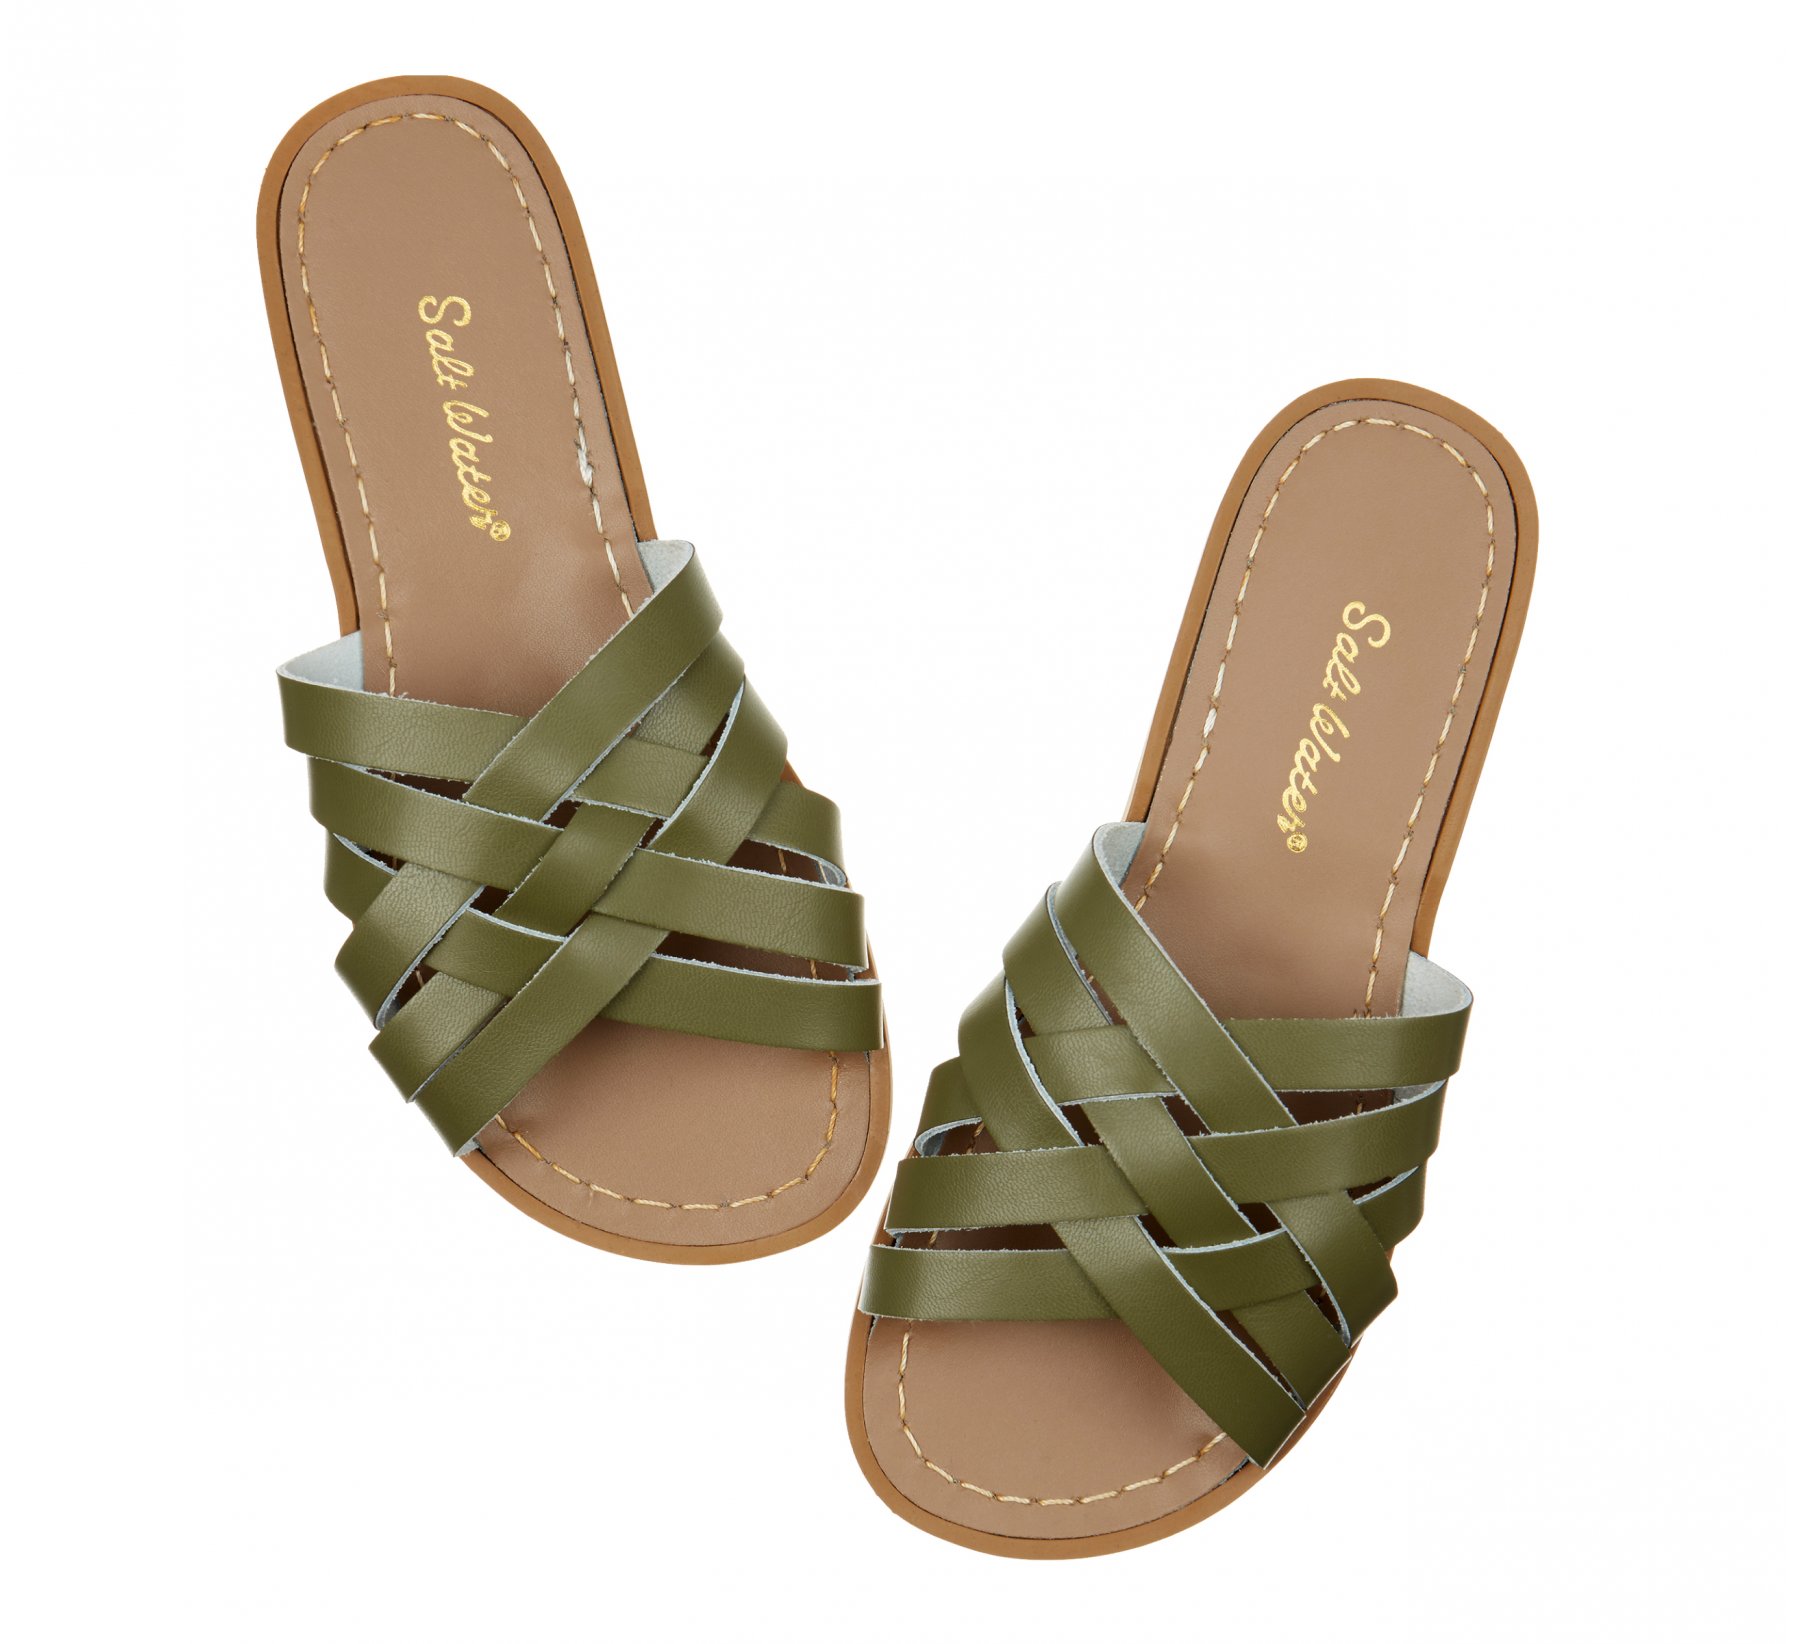 Retro Slide Olivgrün - Salt Water Sandals